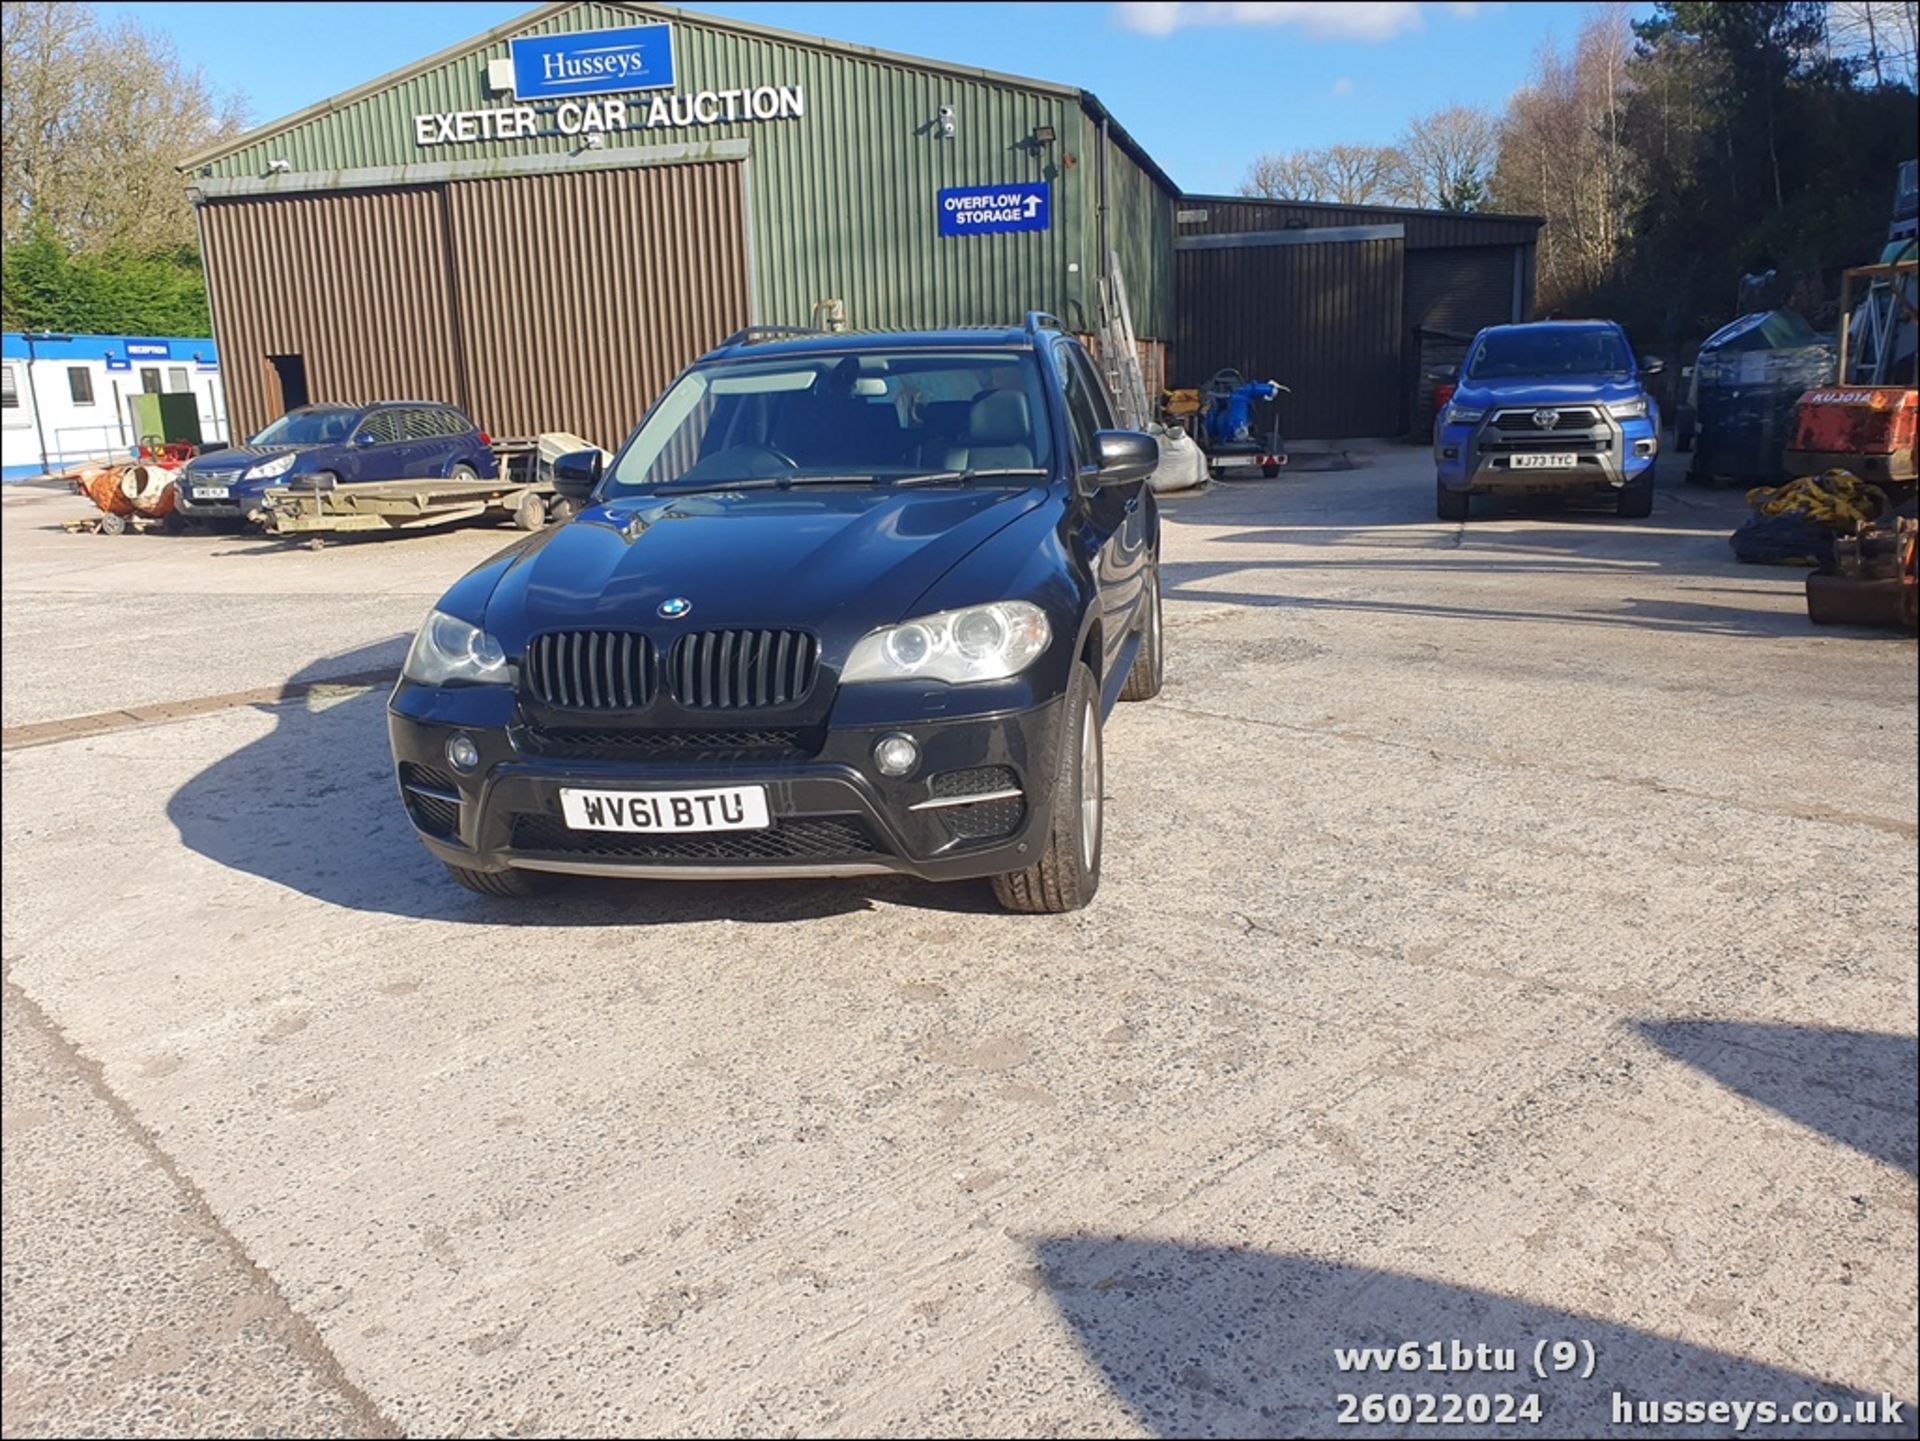 11/61 BMW X5 XDRIVE30D SE AUTO - 2993cc 5dr Estate (Black, 85k) - Image 10 of 51